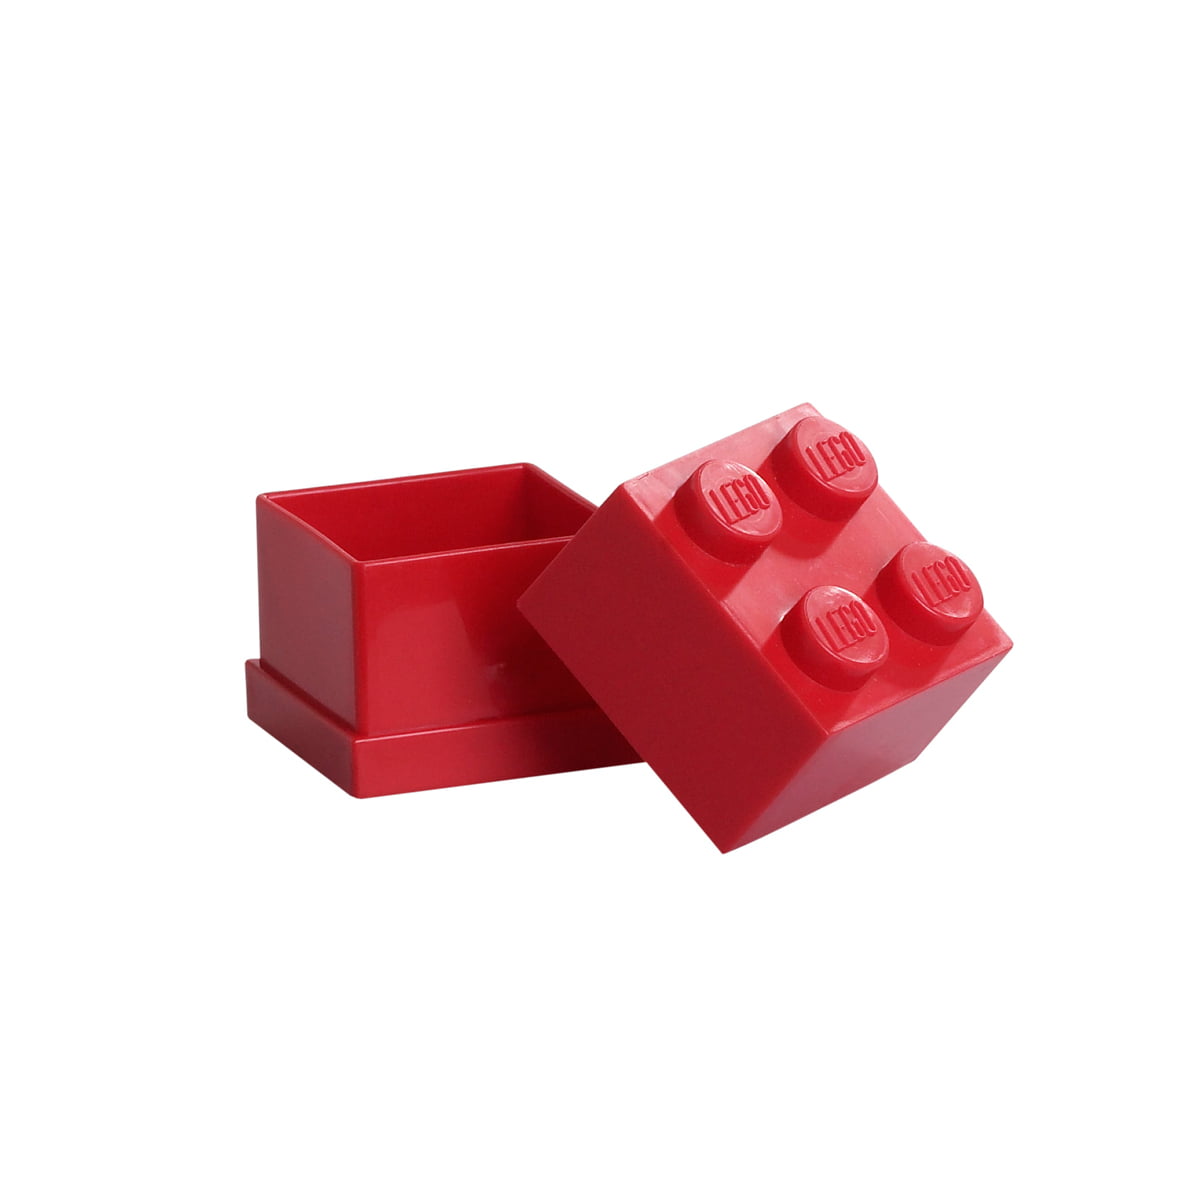 Mini-Box 4 by Lego in the home design shop